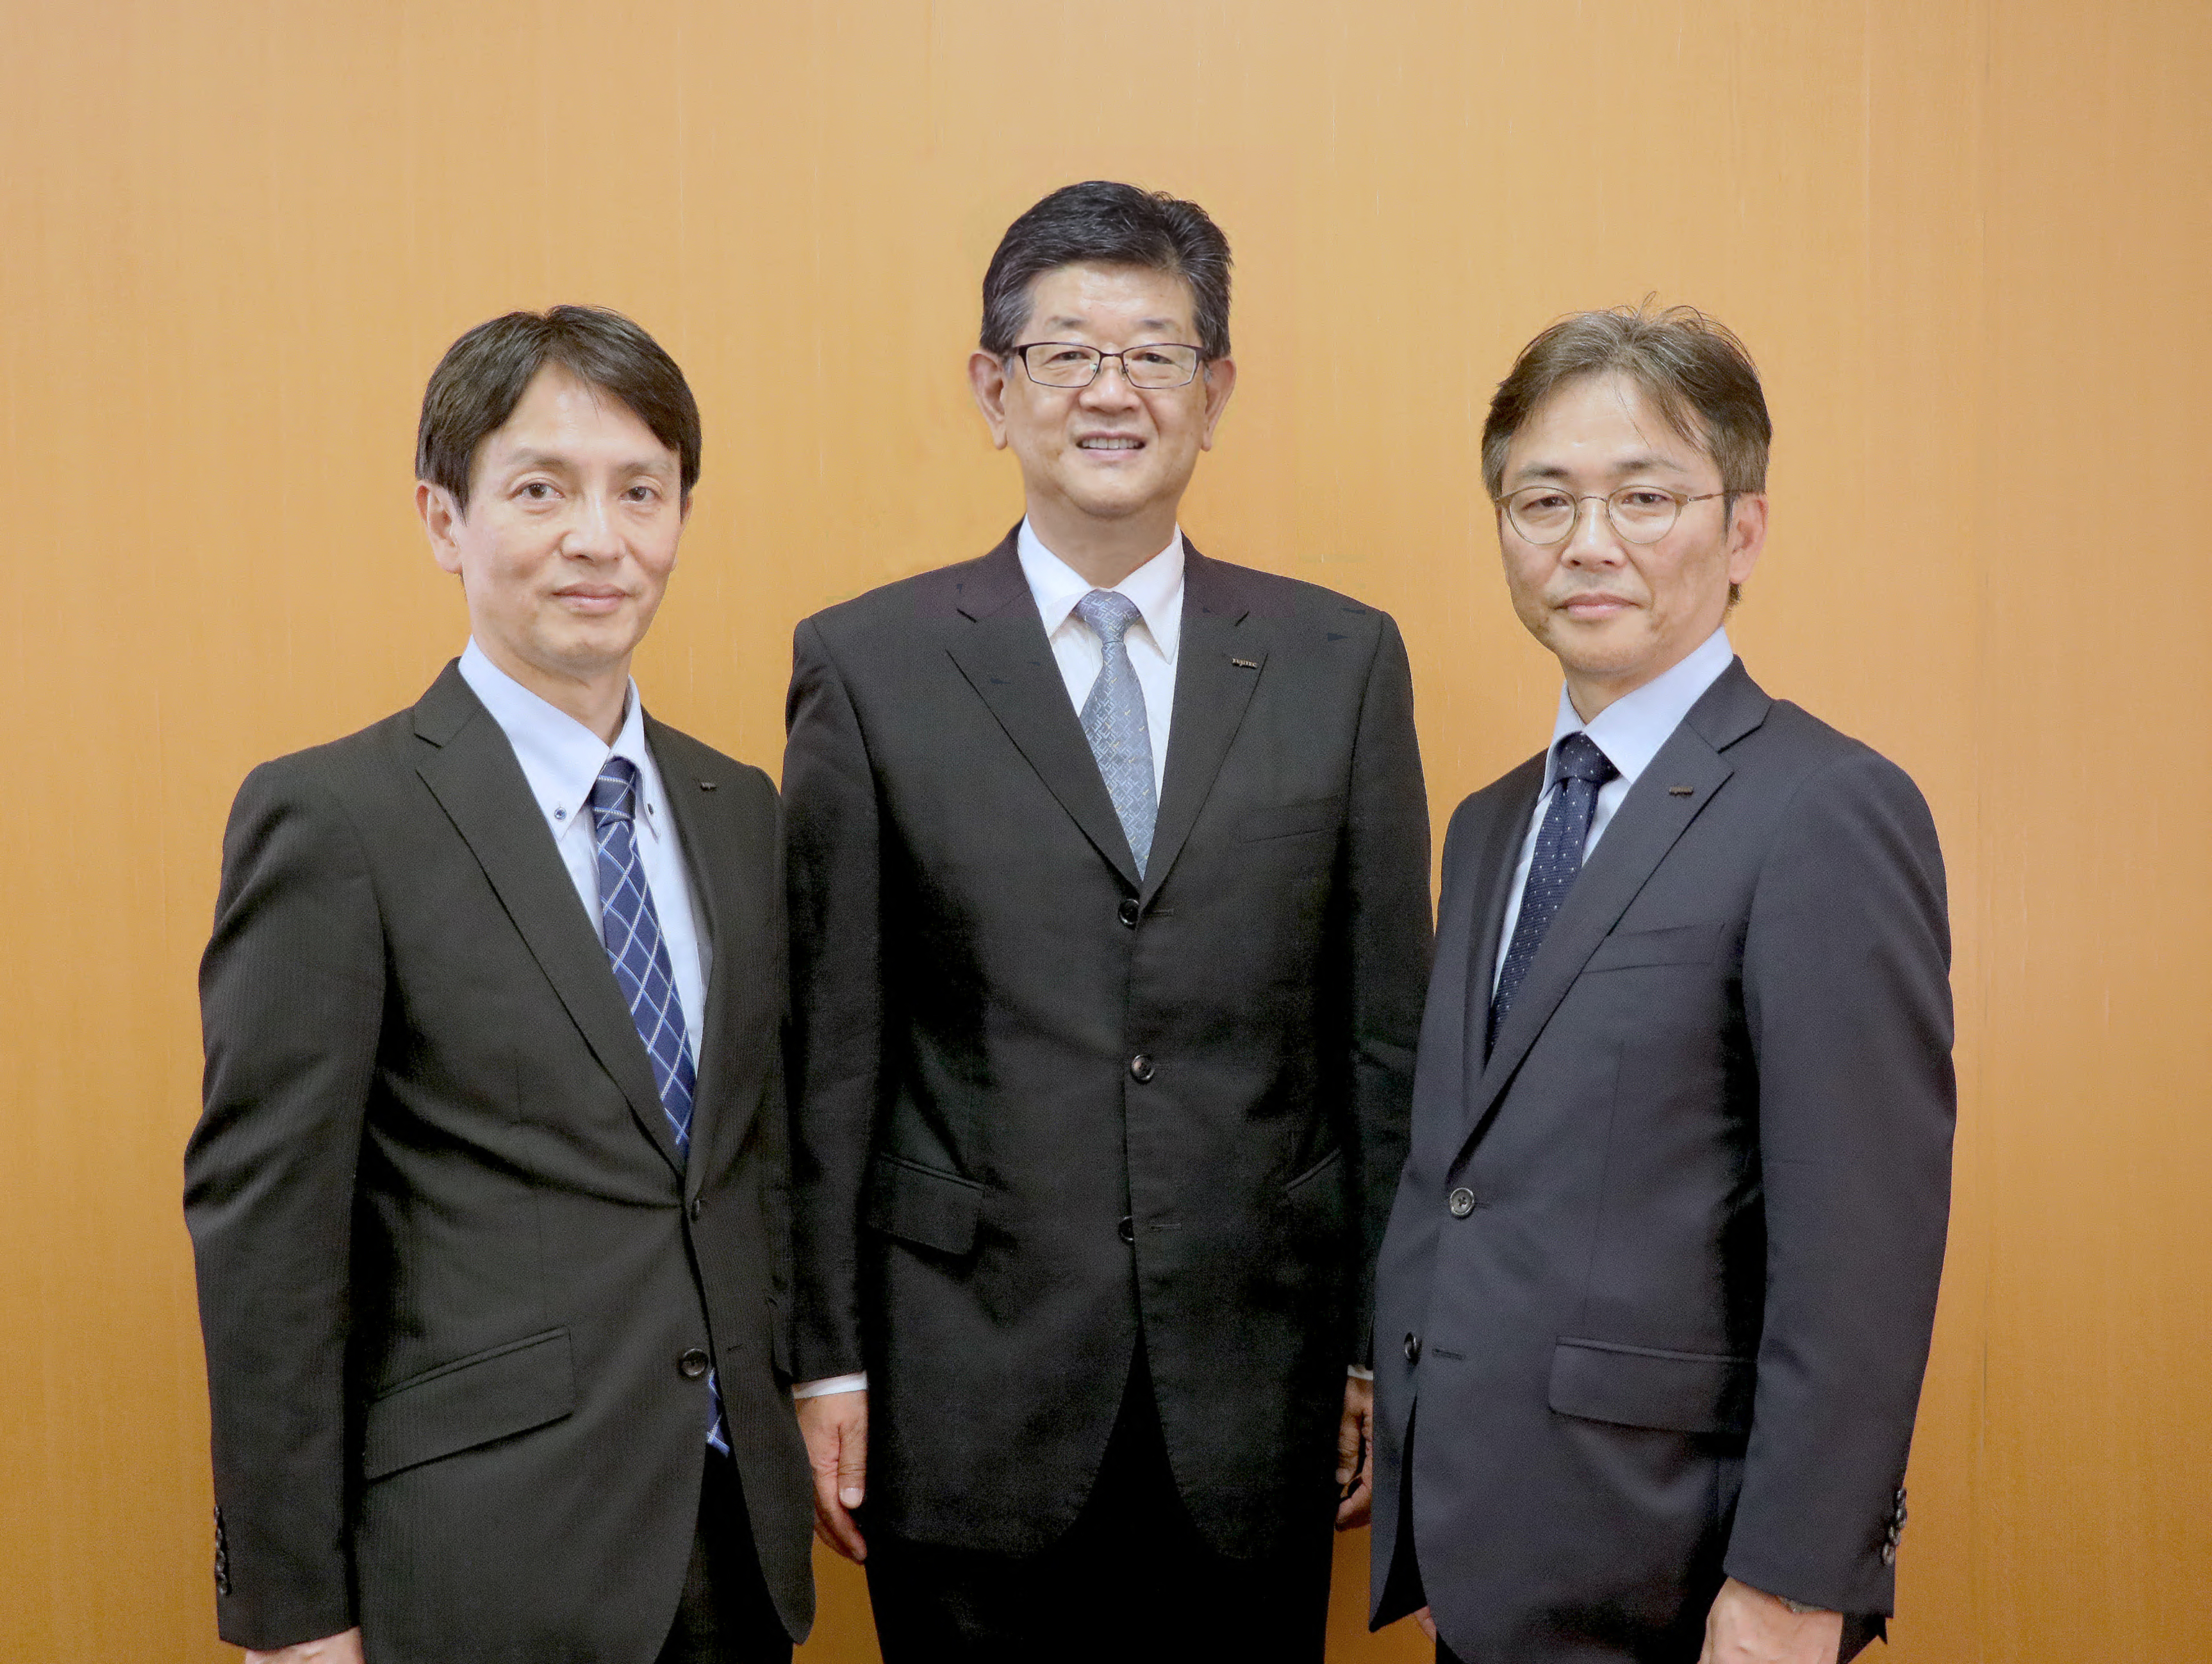 From left to right, are Director Kosuke Sato, President and CEO Masayoshi Harada and Senior Executive Operating Officer Takashige Nakajima